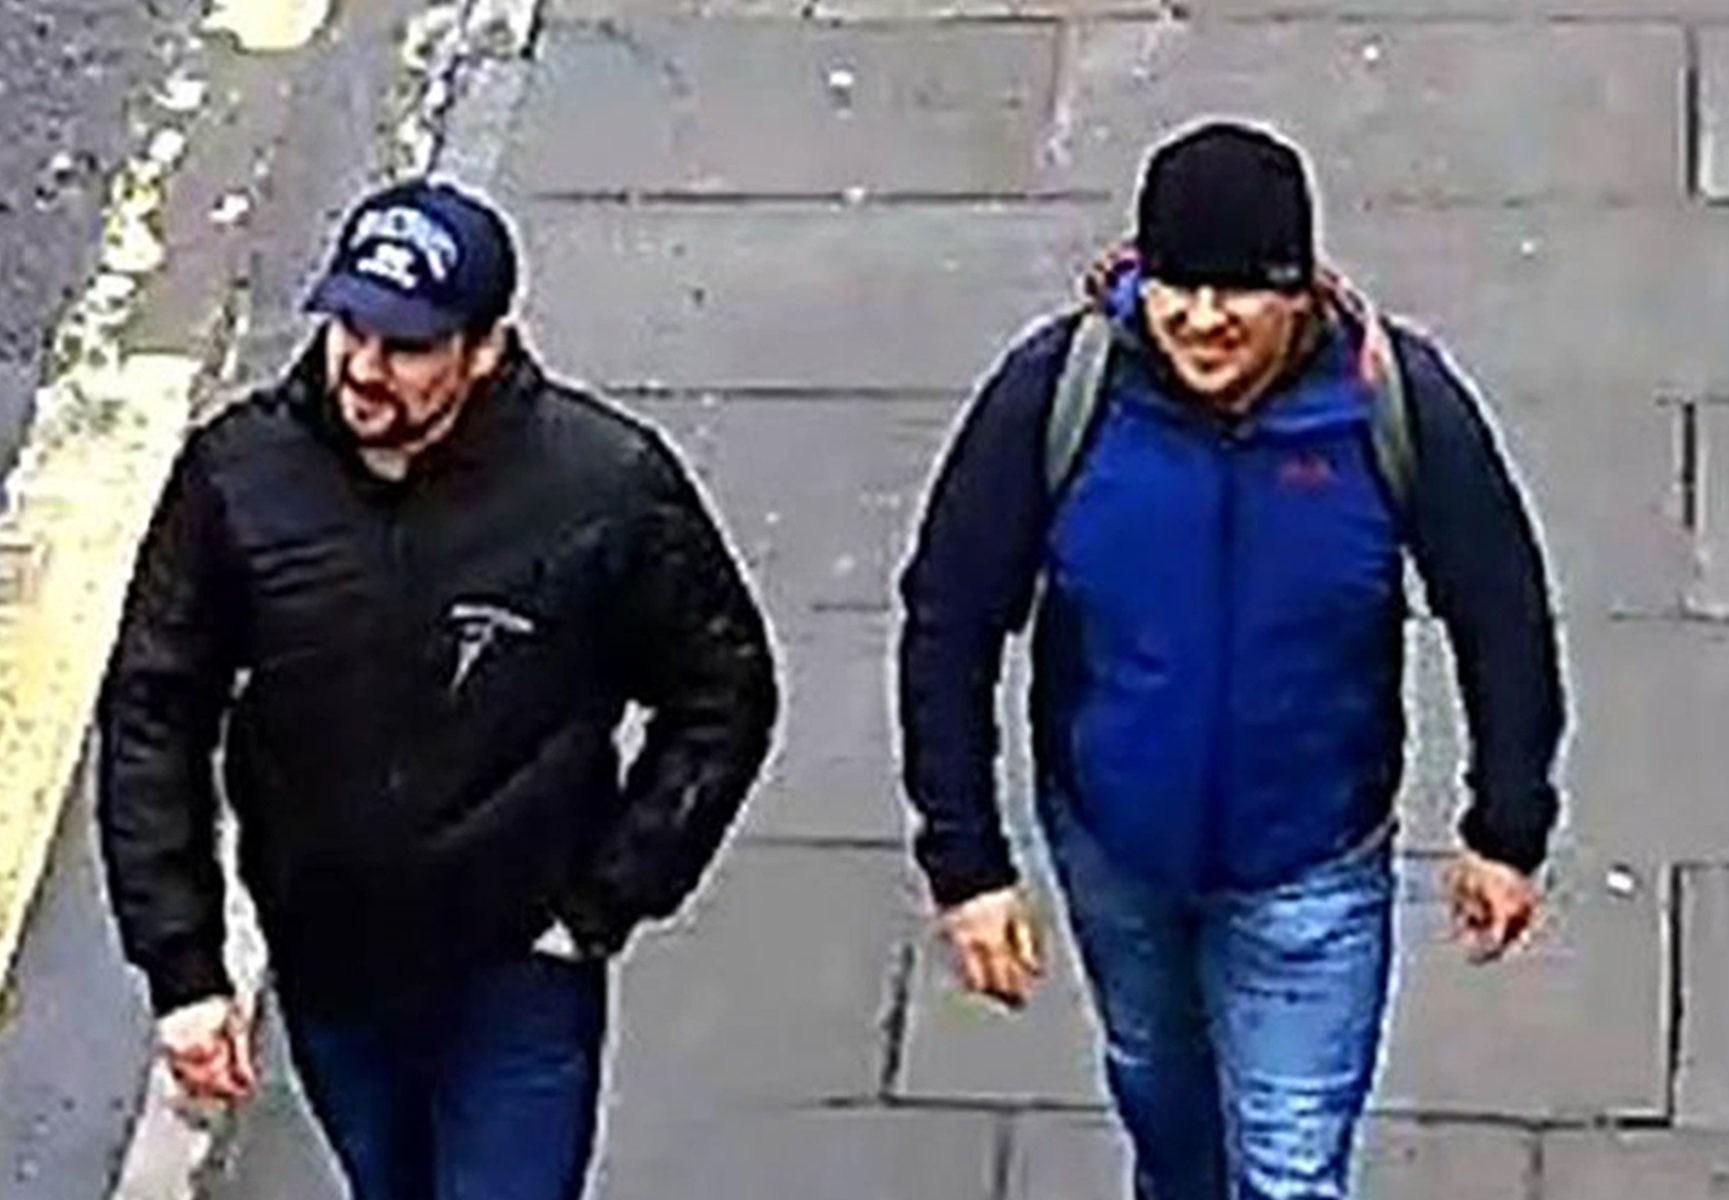 CCTV image issued by the Metropolitan Police of Russian Nationals Ruslan Boshirov and Alexander Petrov on Fisherton Road, Salisbury. (Press Association)